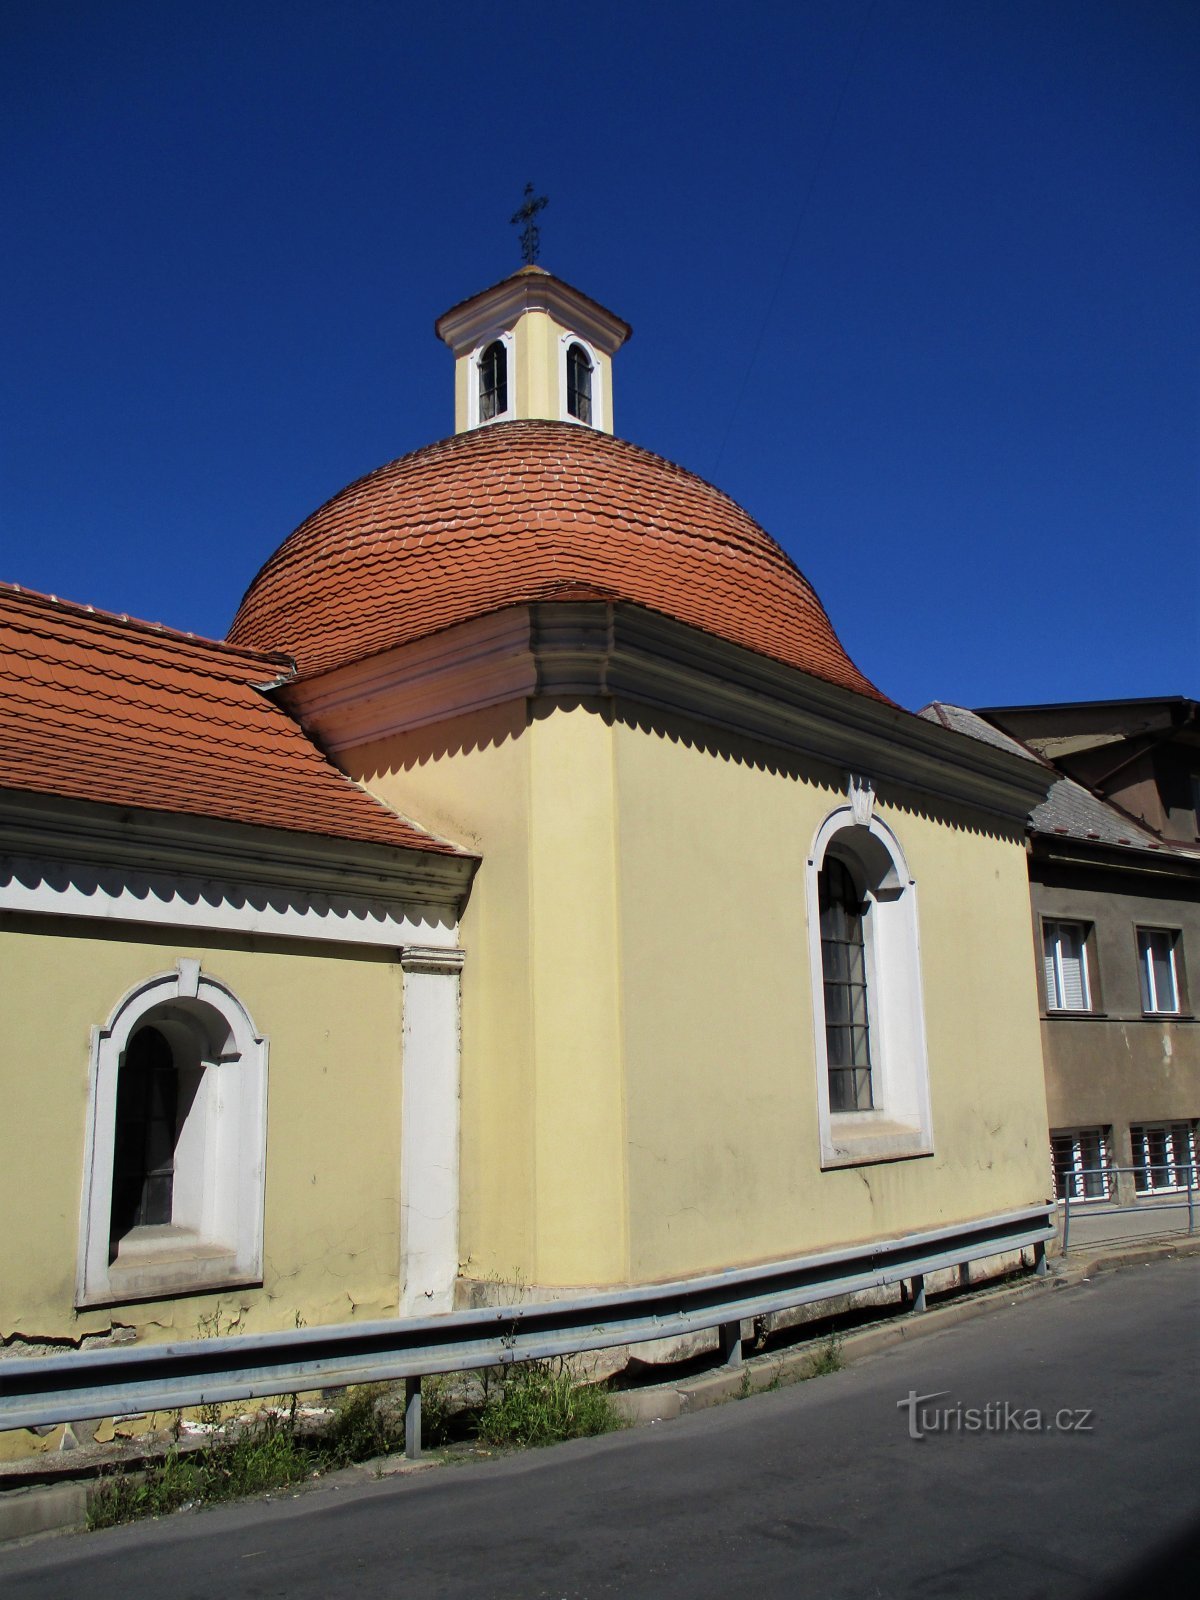 Capela de S. Josefa (Rudnice nad Labem, 31.7.2020 de julho de XNUMX)